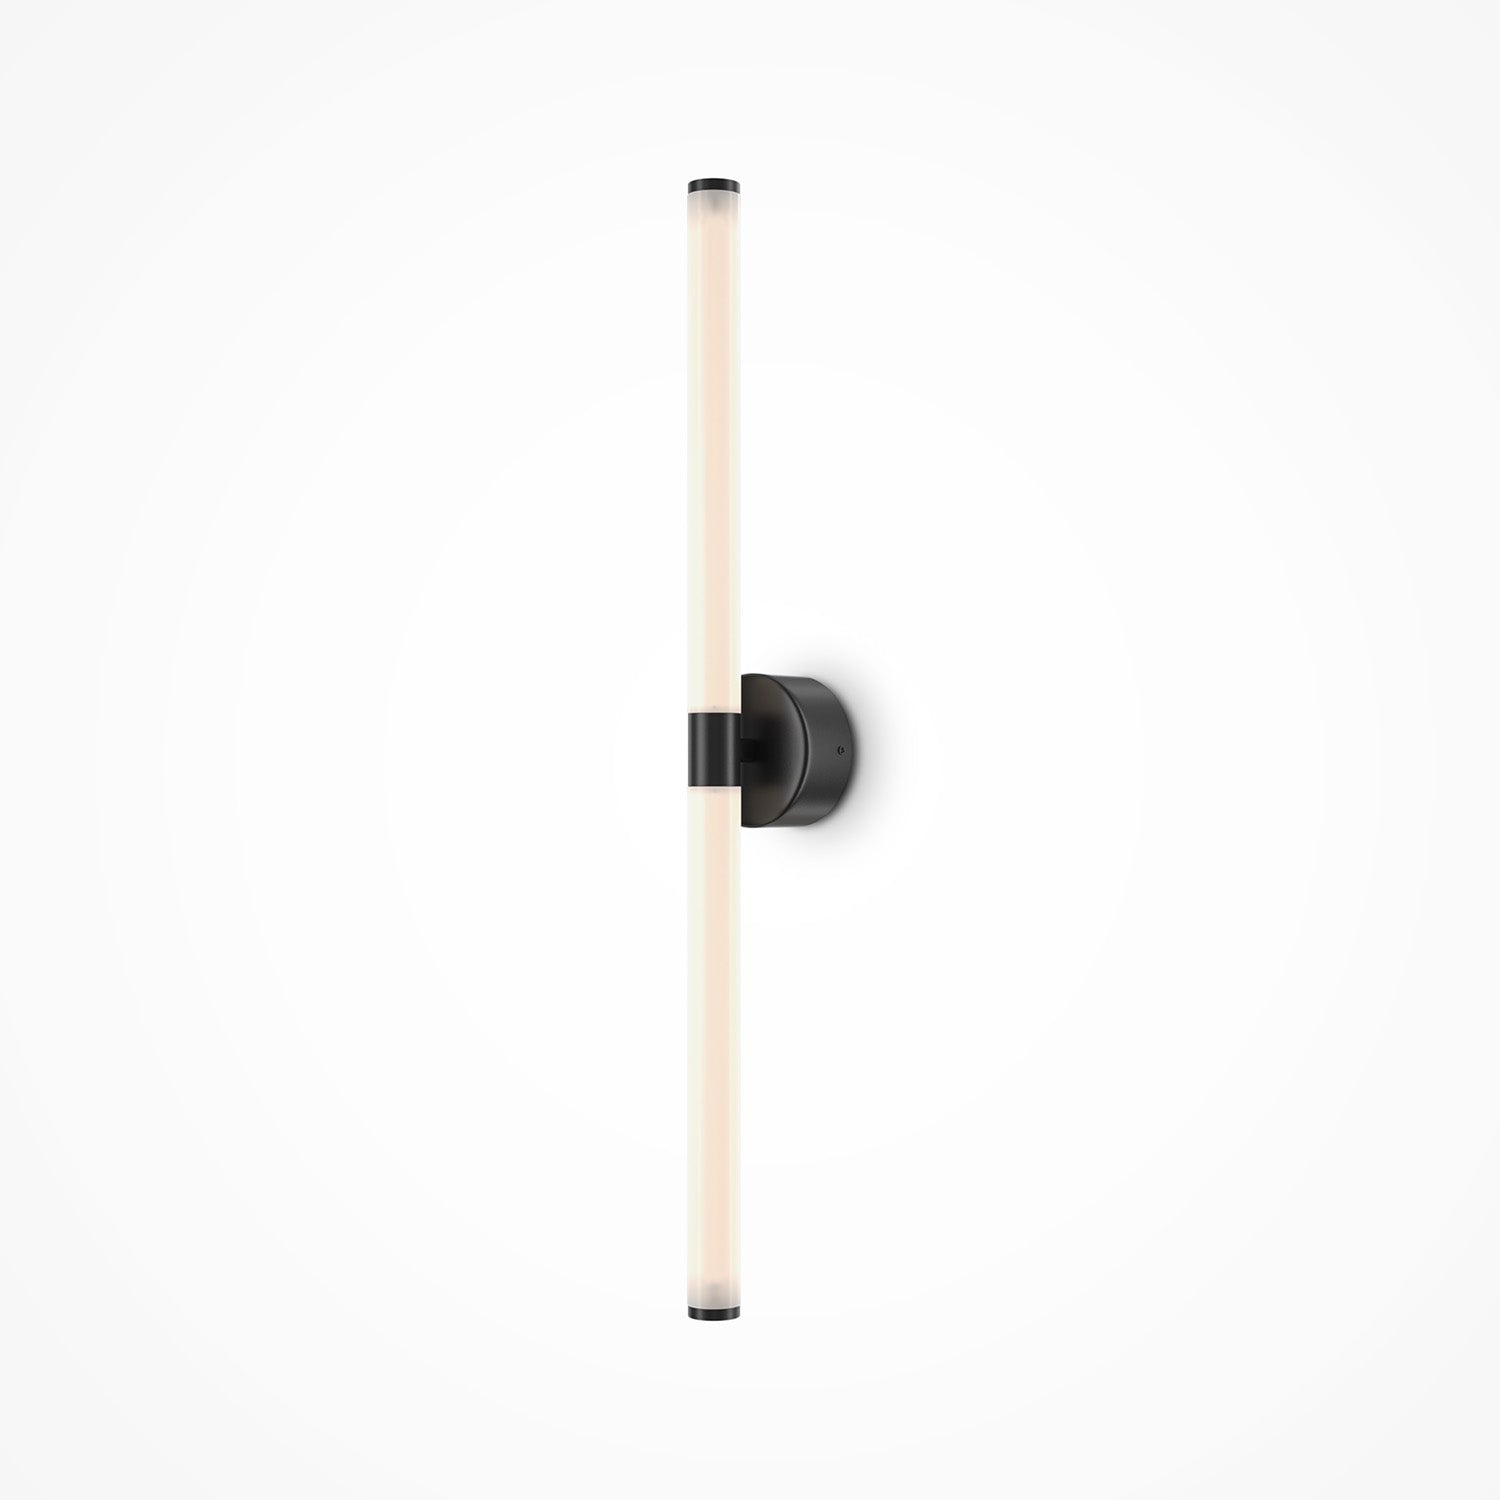 AXIS - Modern LED tube wall light, black, white or gold